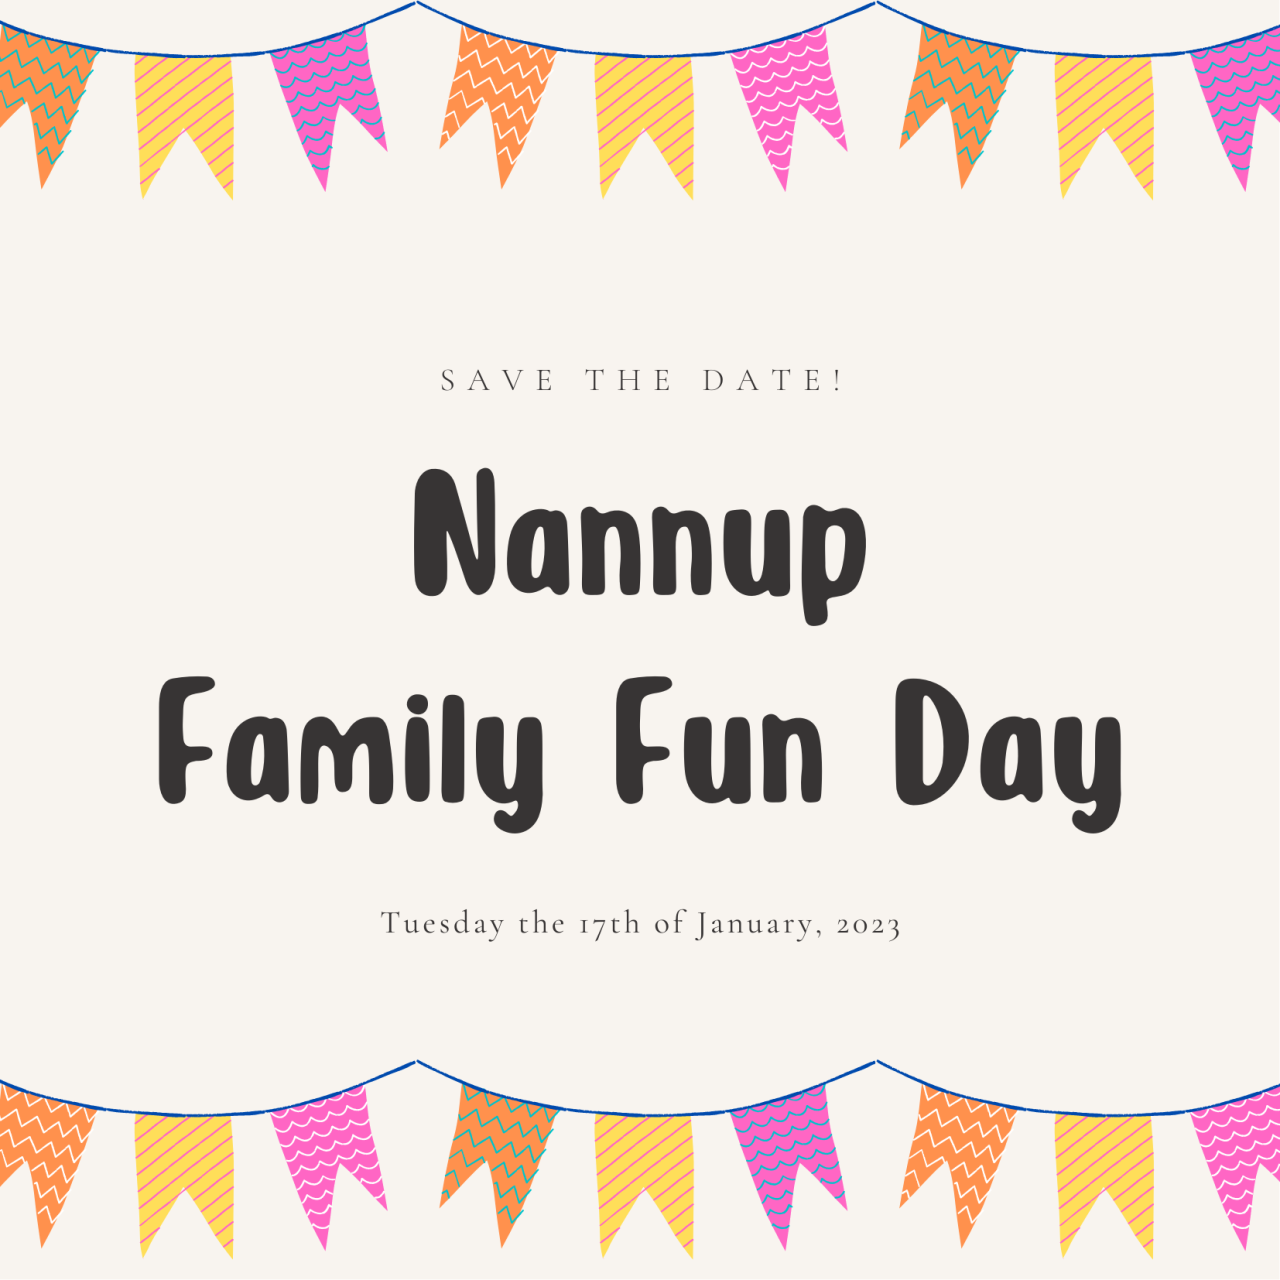 Nannup Family Fun Day, 2023!